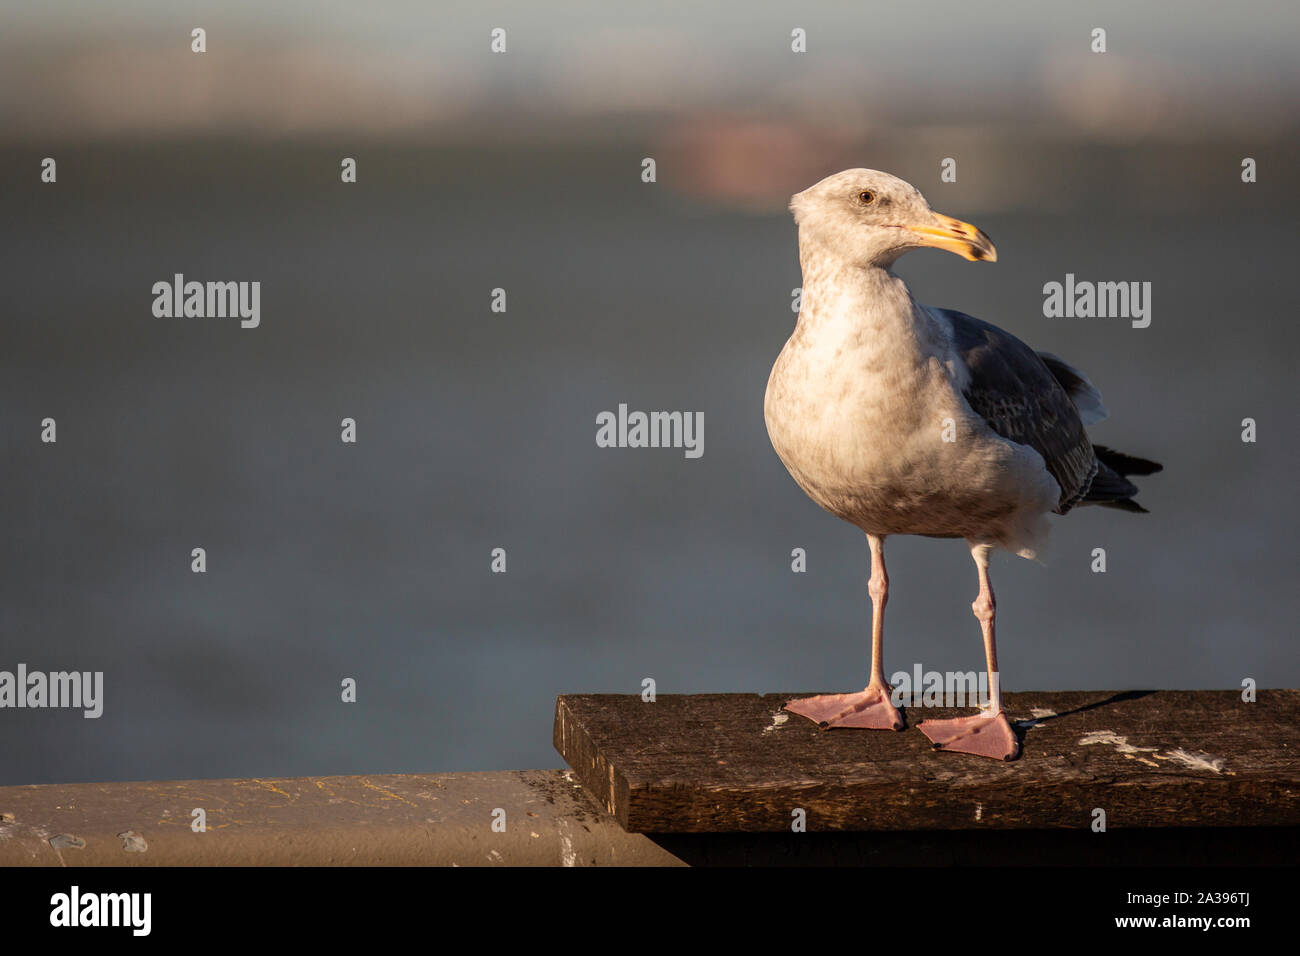 Seagulls of California Stock Photo